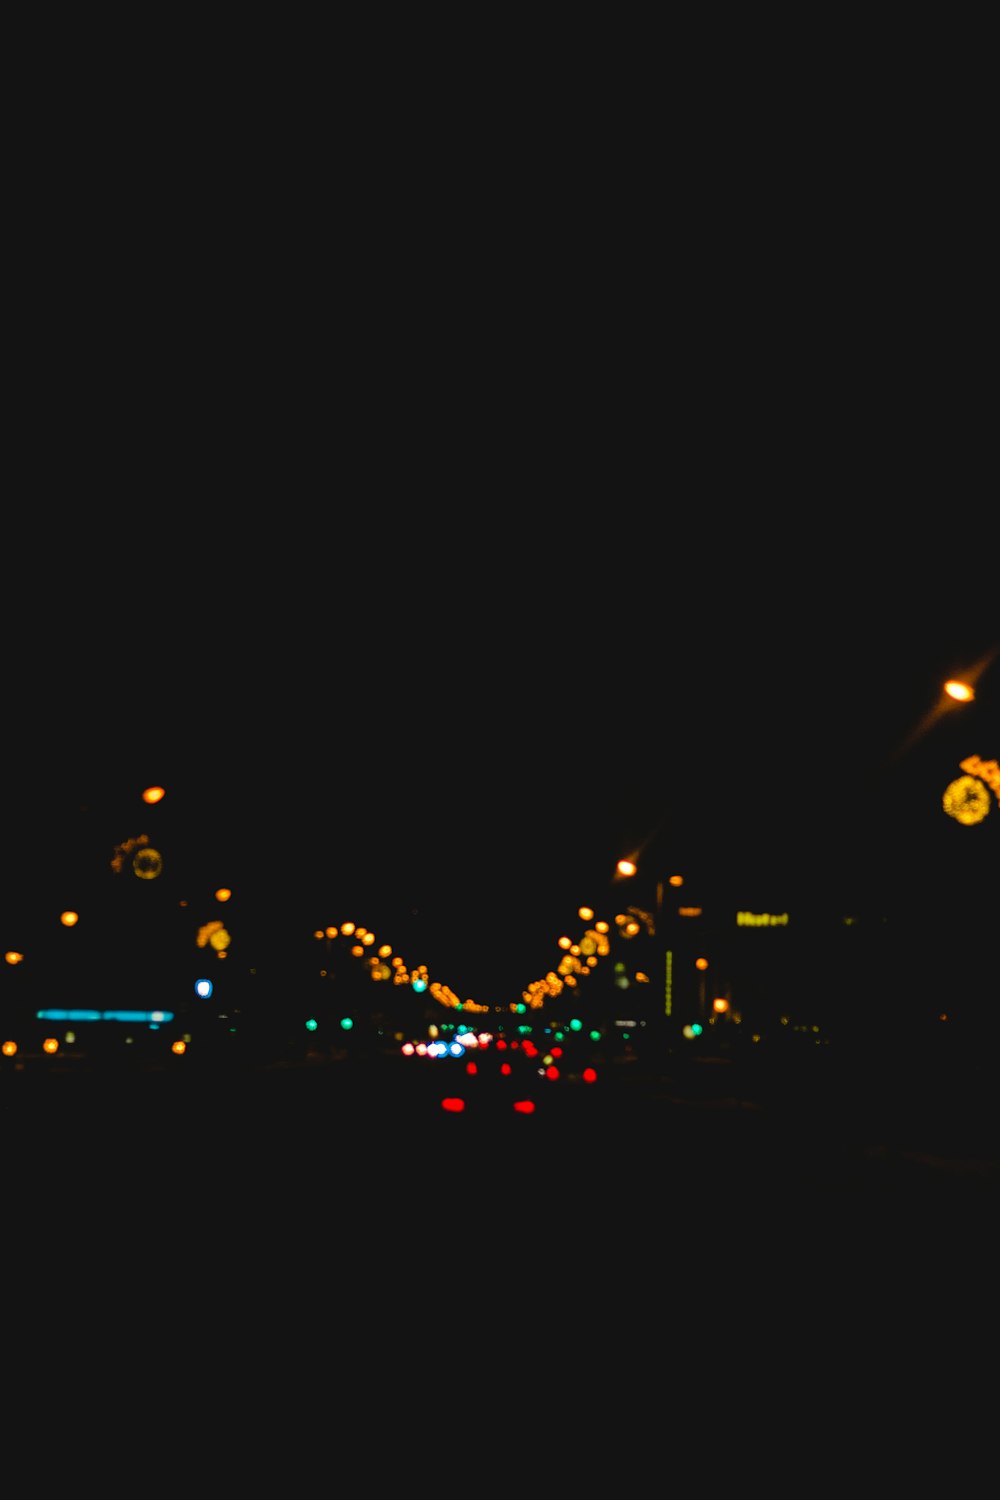 street lights at night